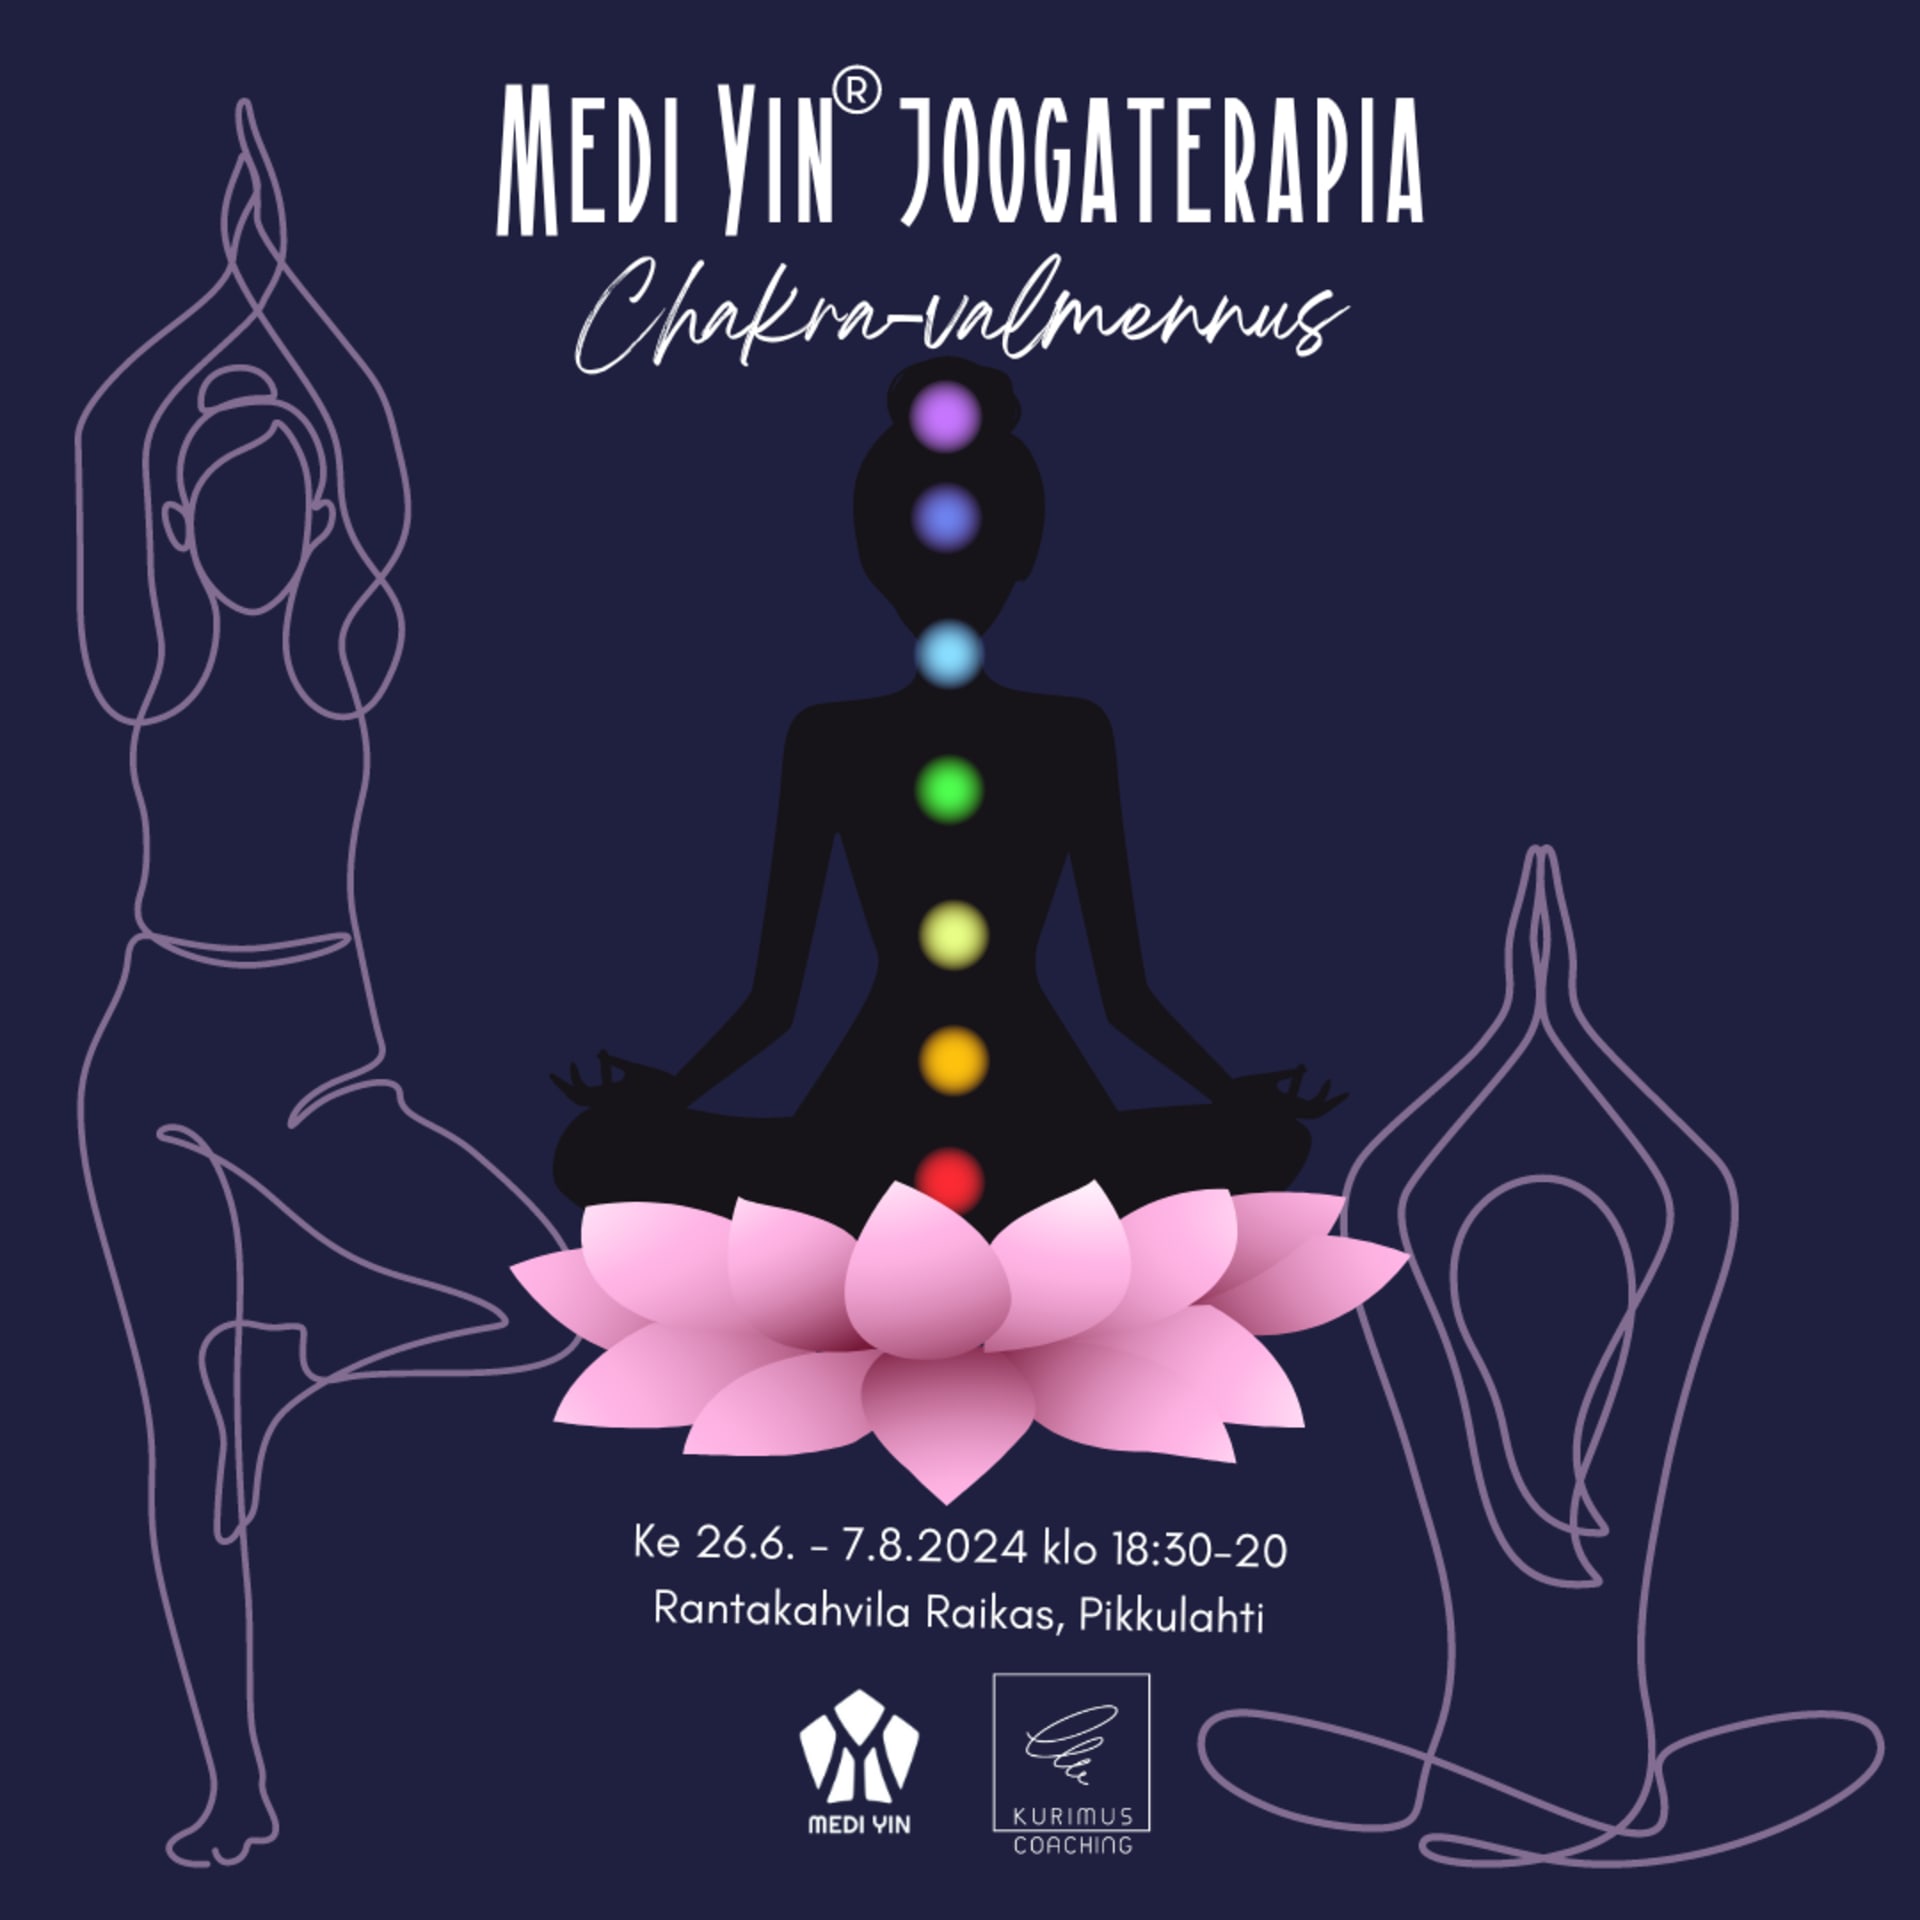 Medi Yin joogaterapeuttinen chakra-valmennus